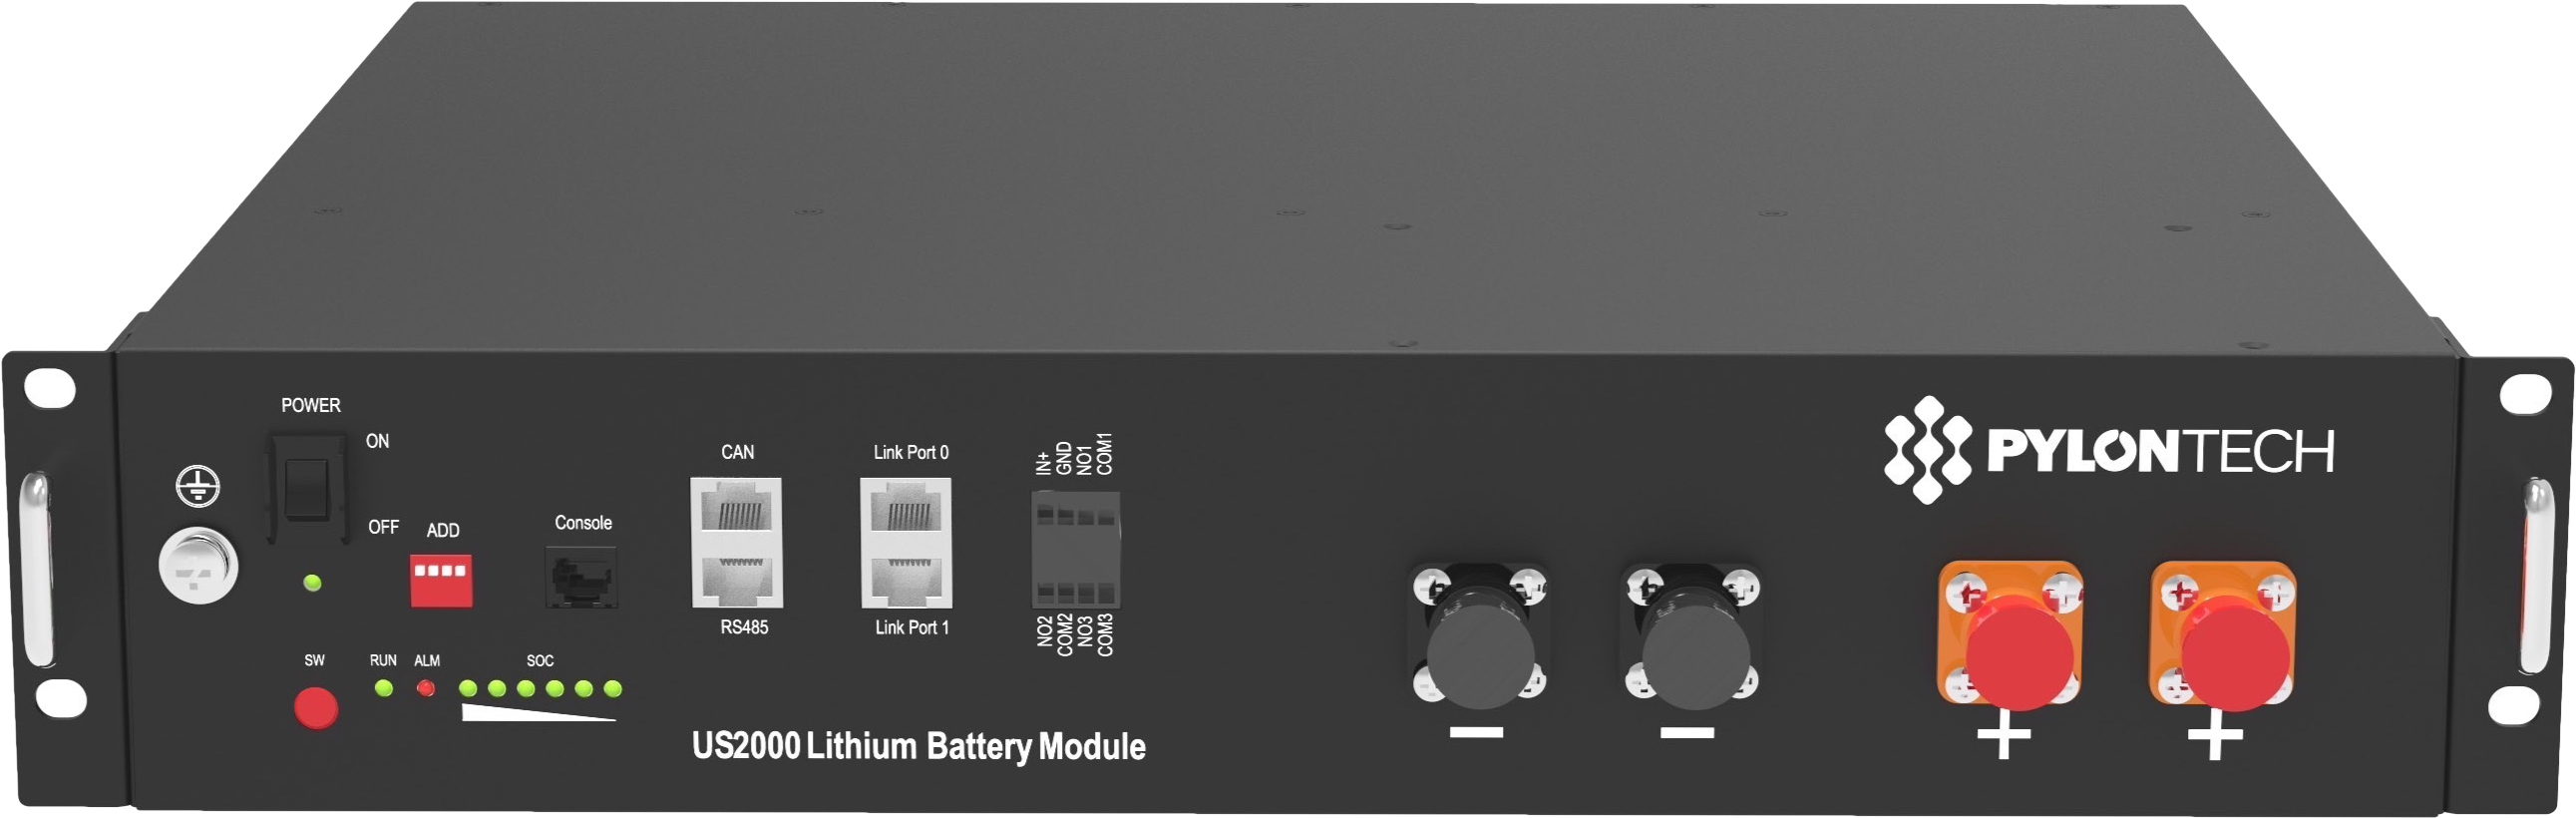 Pylontech U S2000 Lithium Battery Module